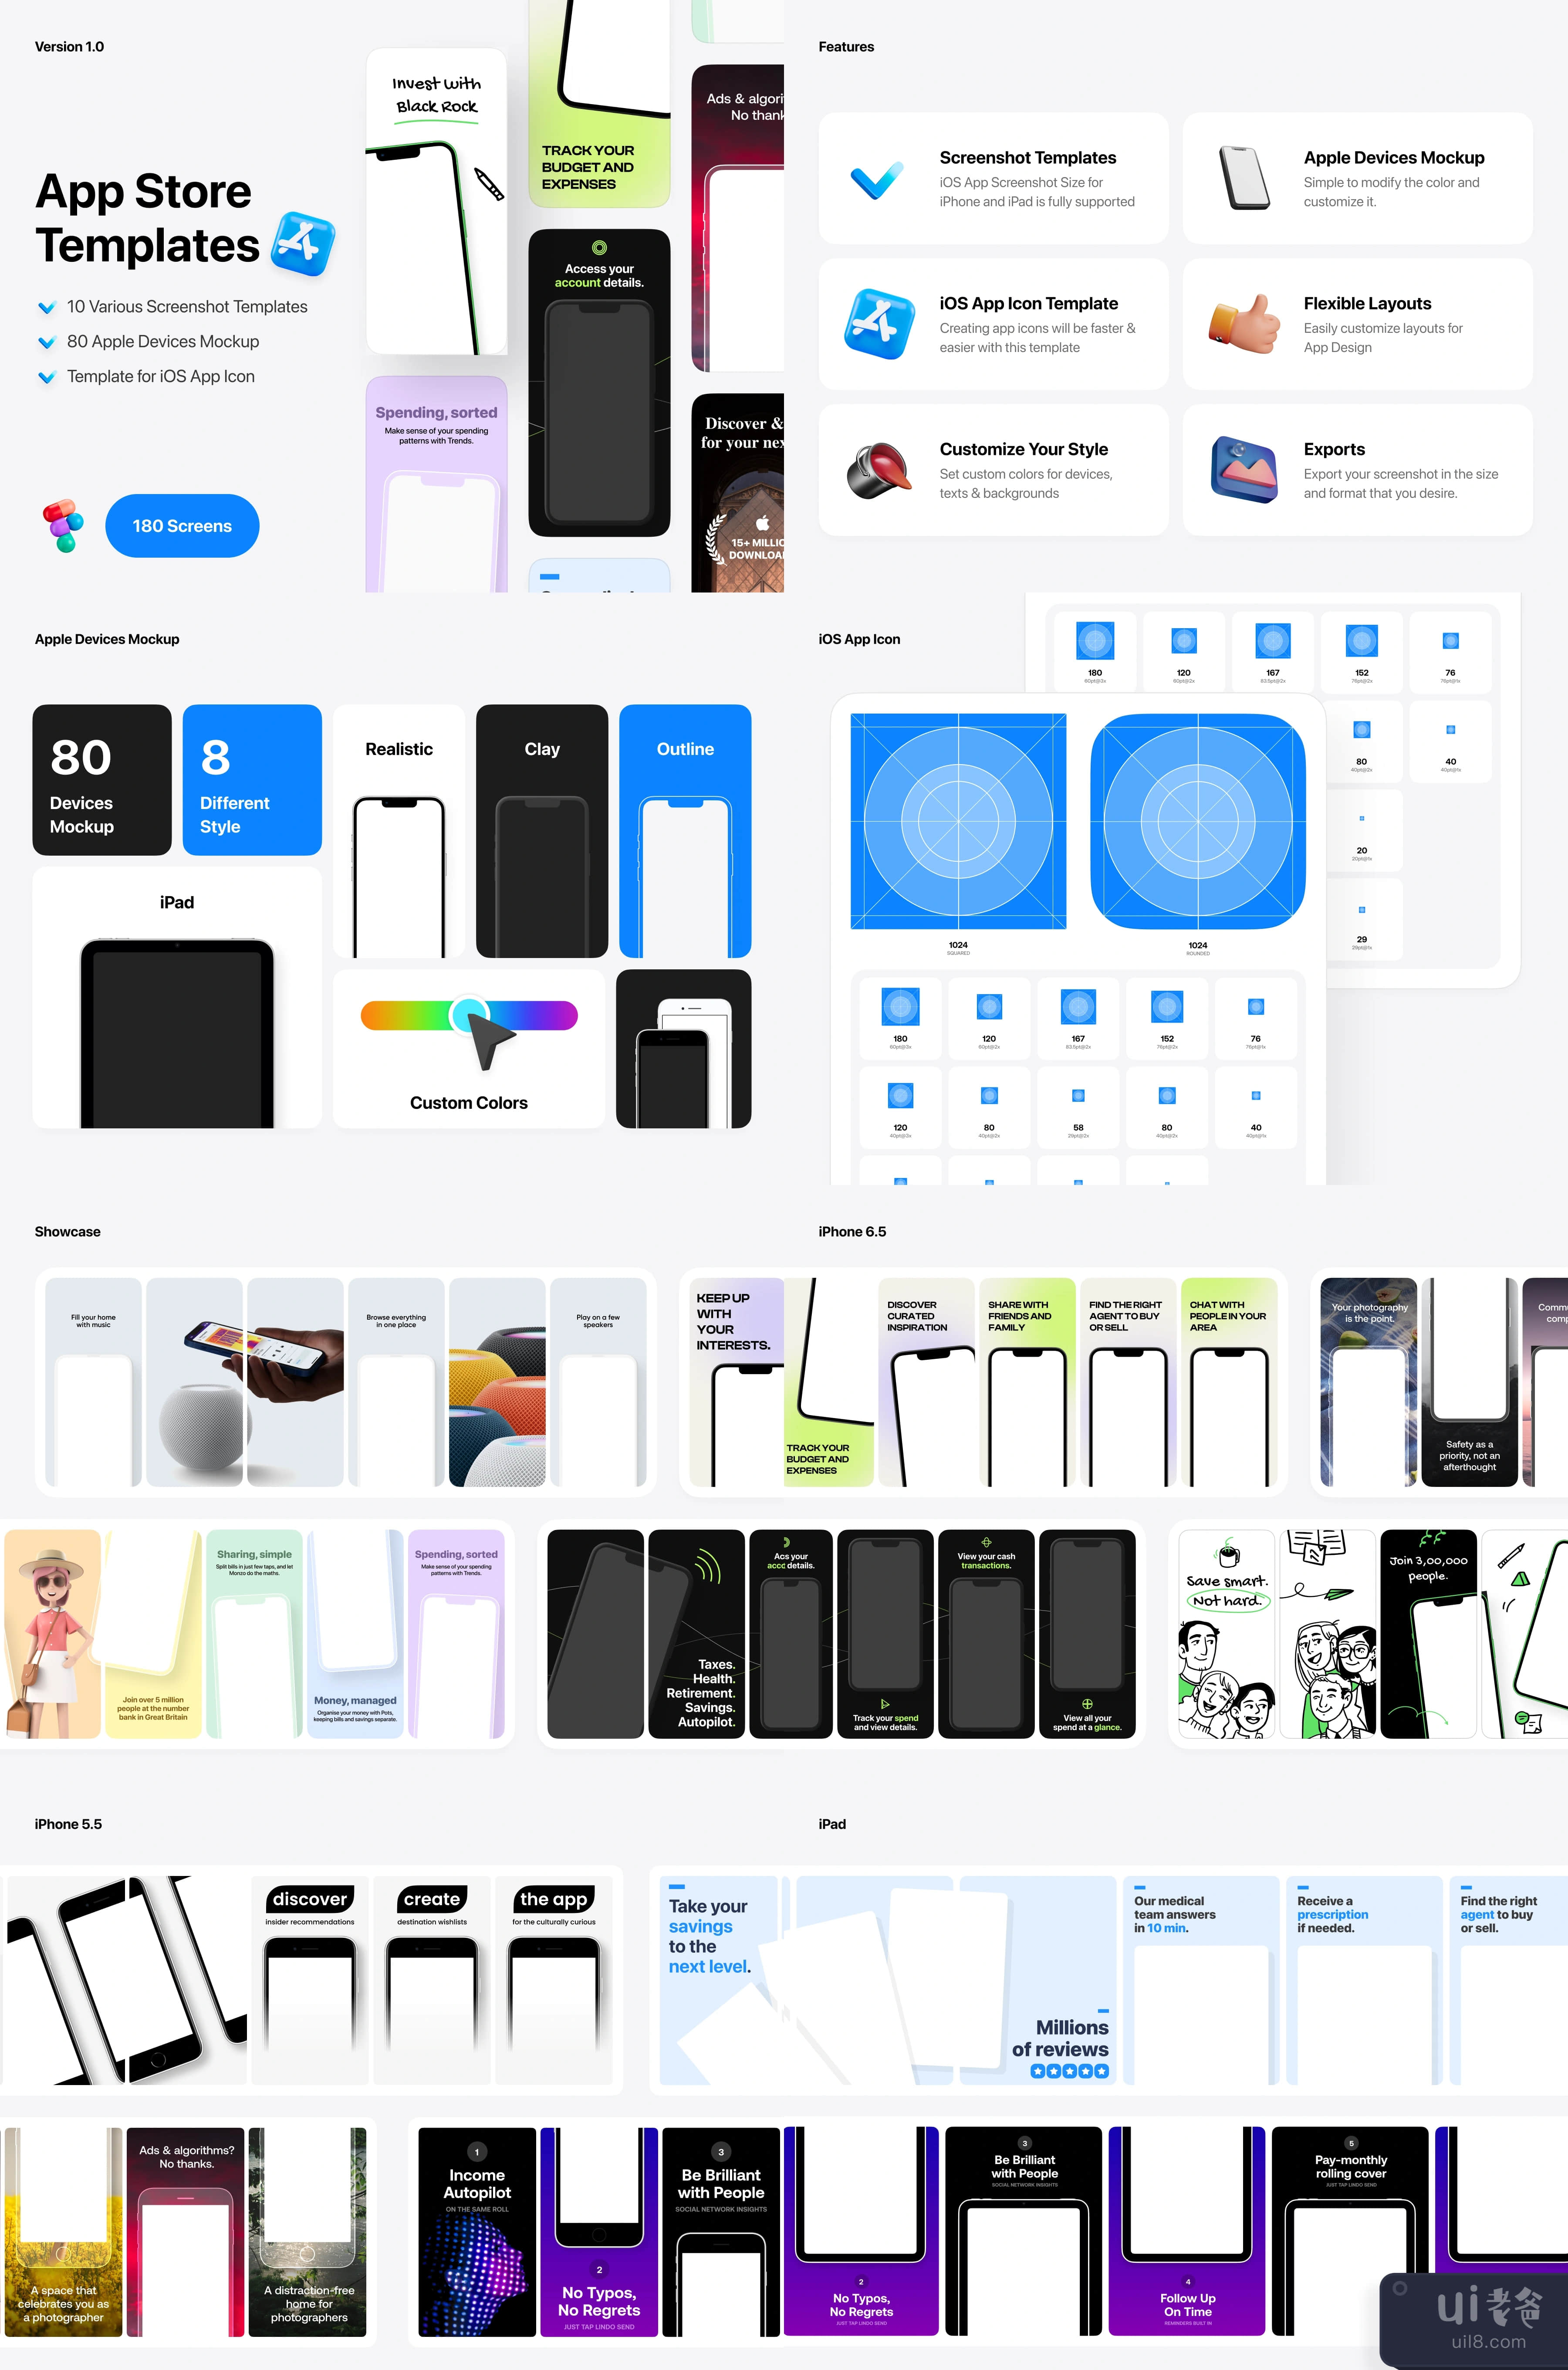 应用商店模板 (App Store Templates)插图1